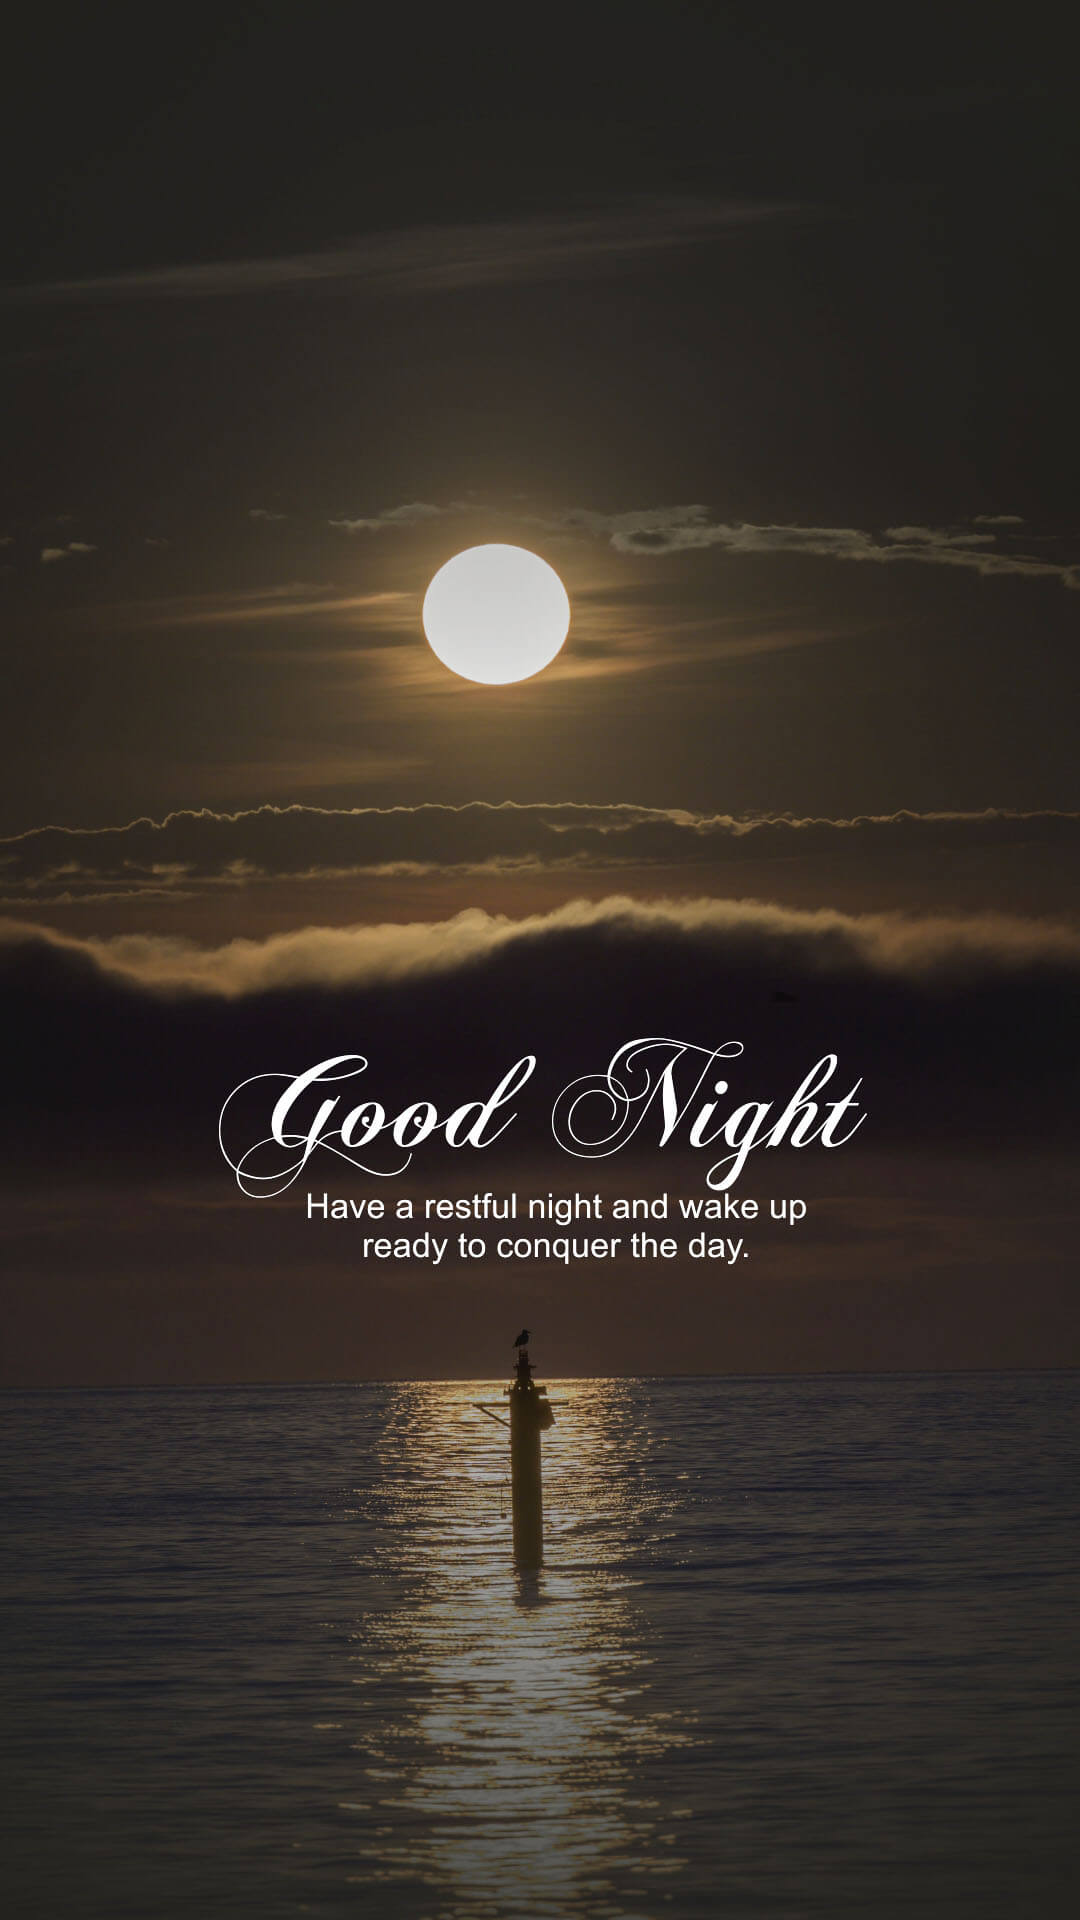 Ship and full moon - Good Night Image